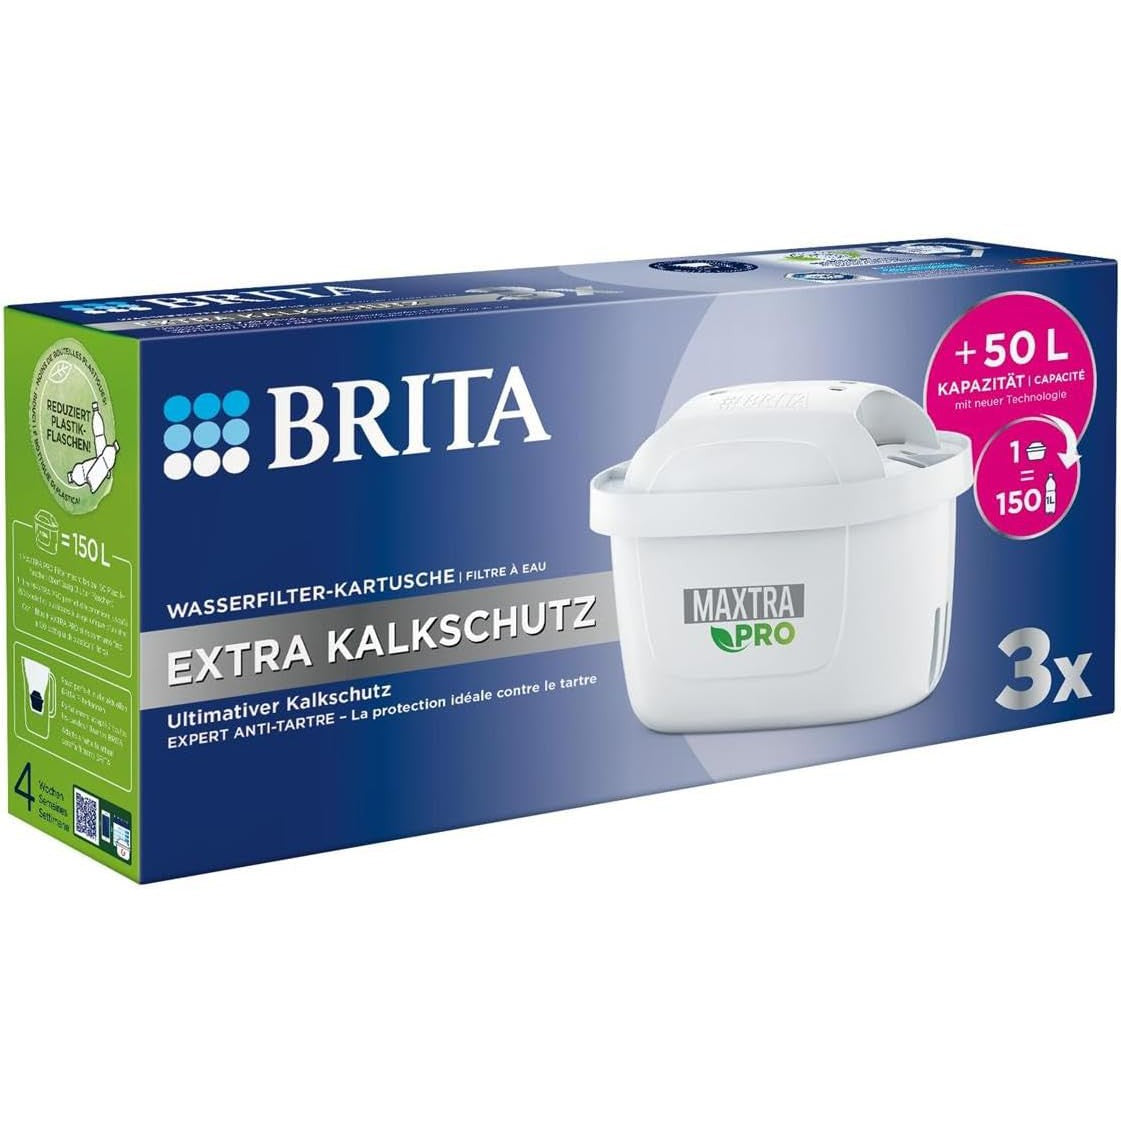 BRITA MAXTRA PRO Limescale Expert Water Filter Cartridge 3 Pack